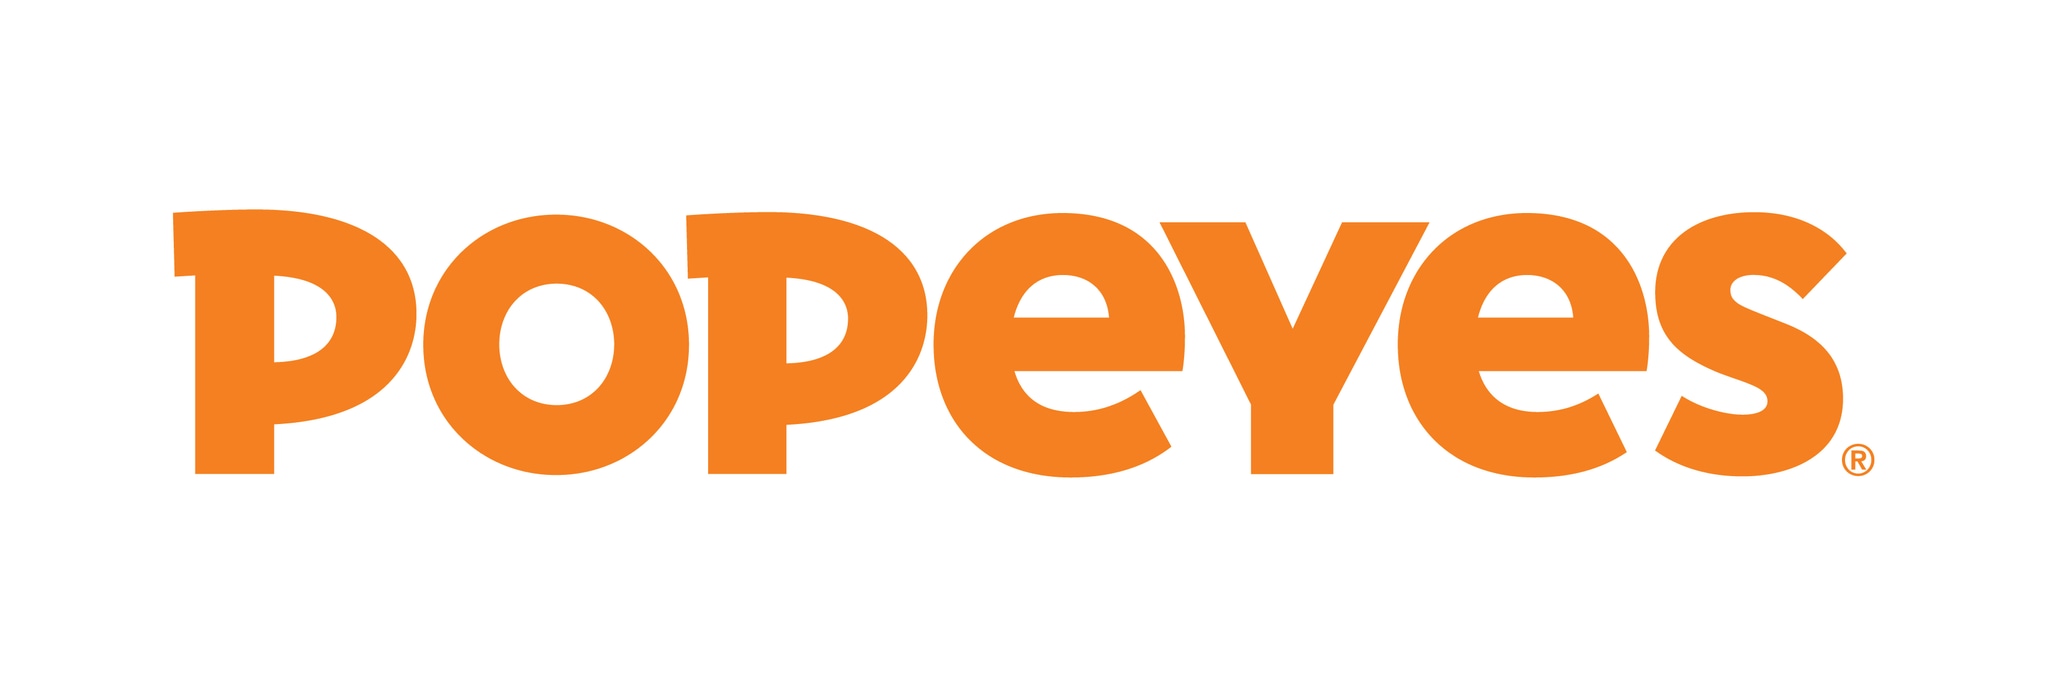 Popeyes – COMING SOON logo